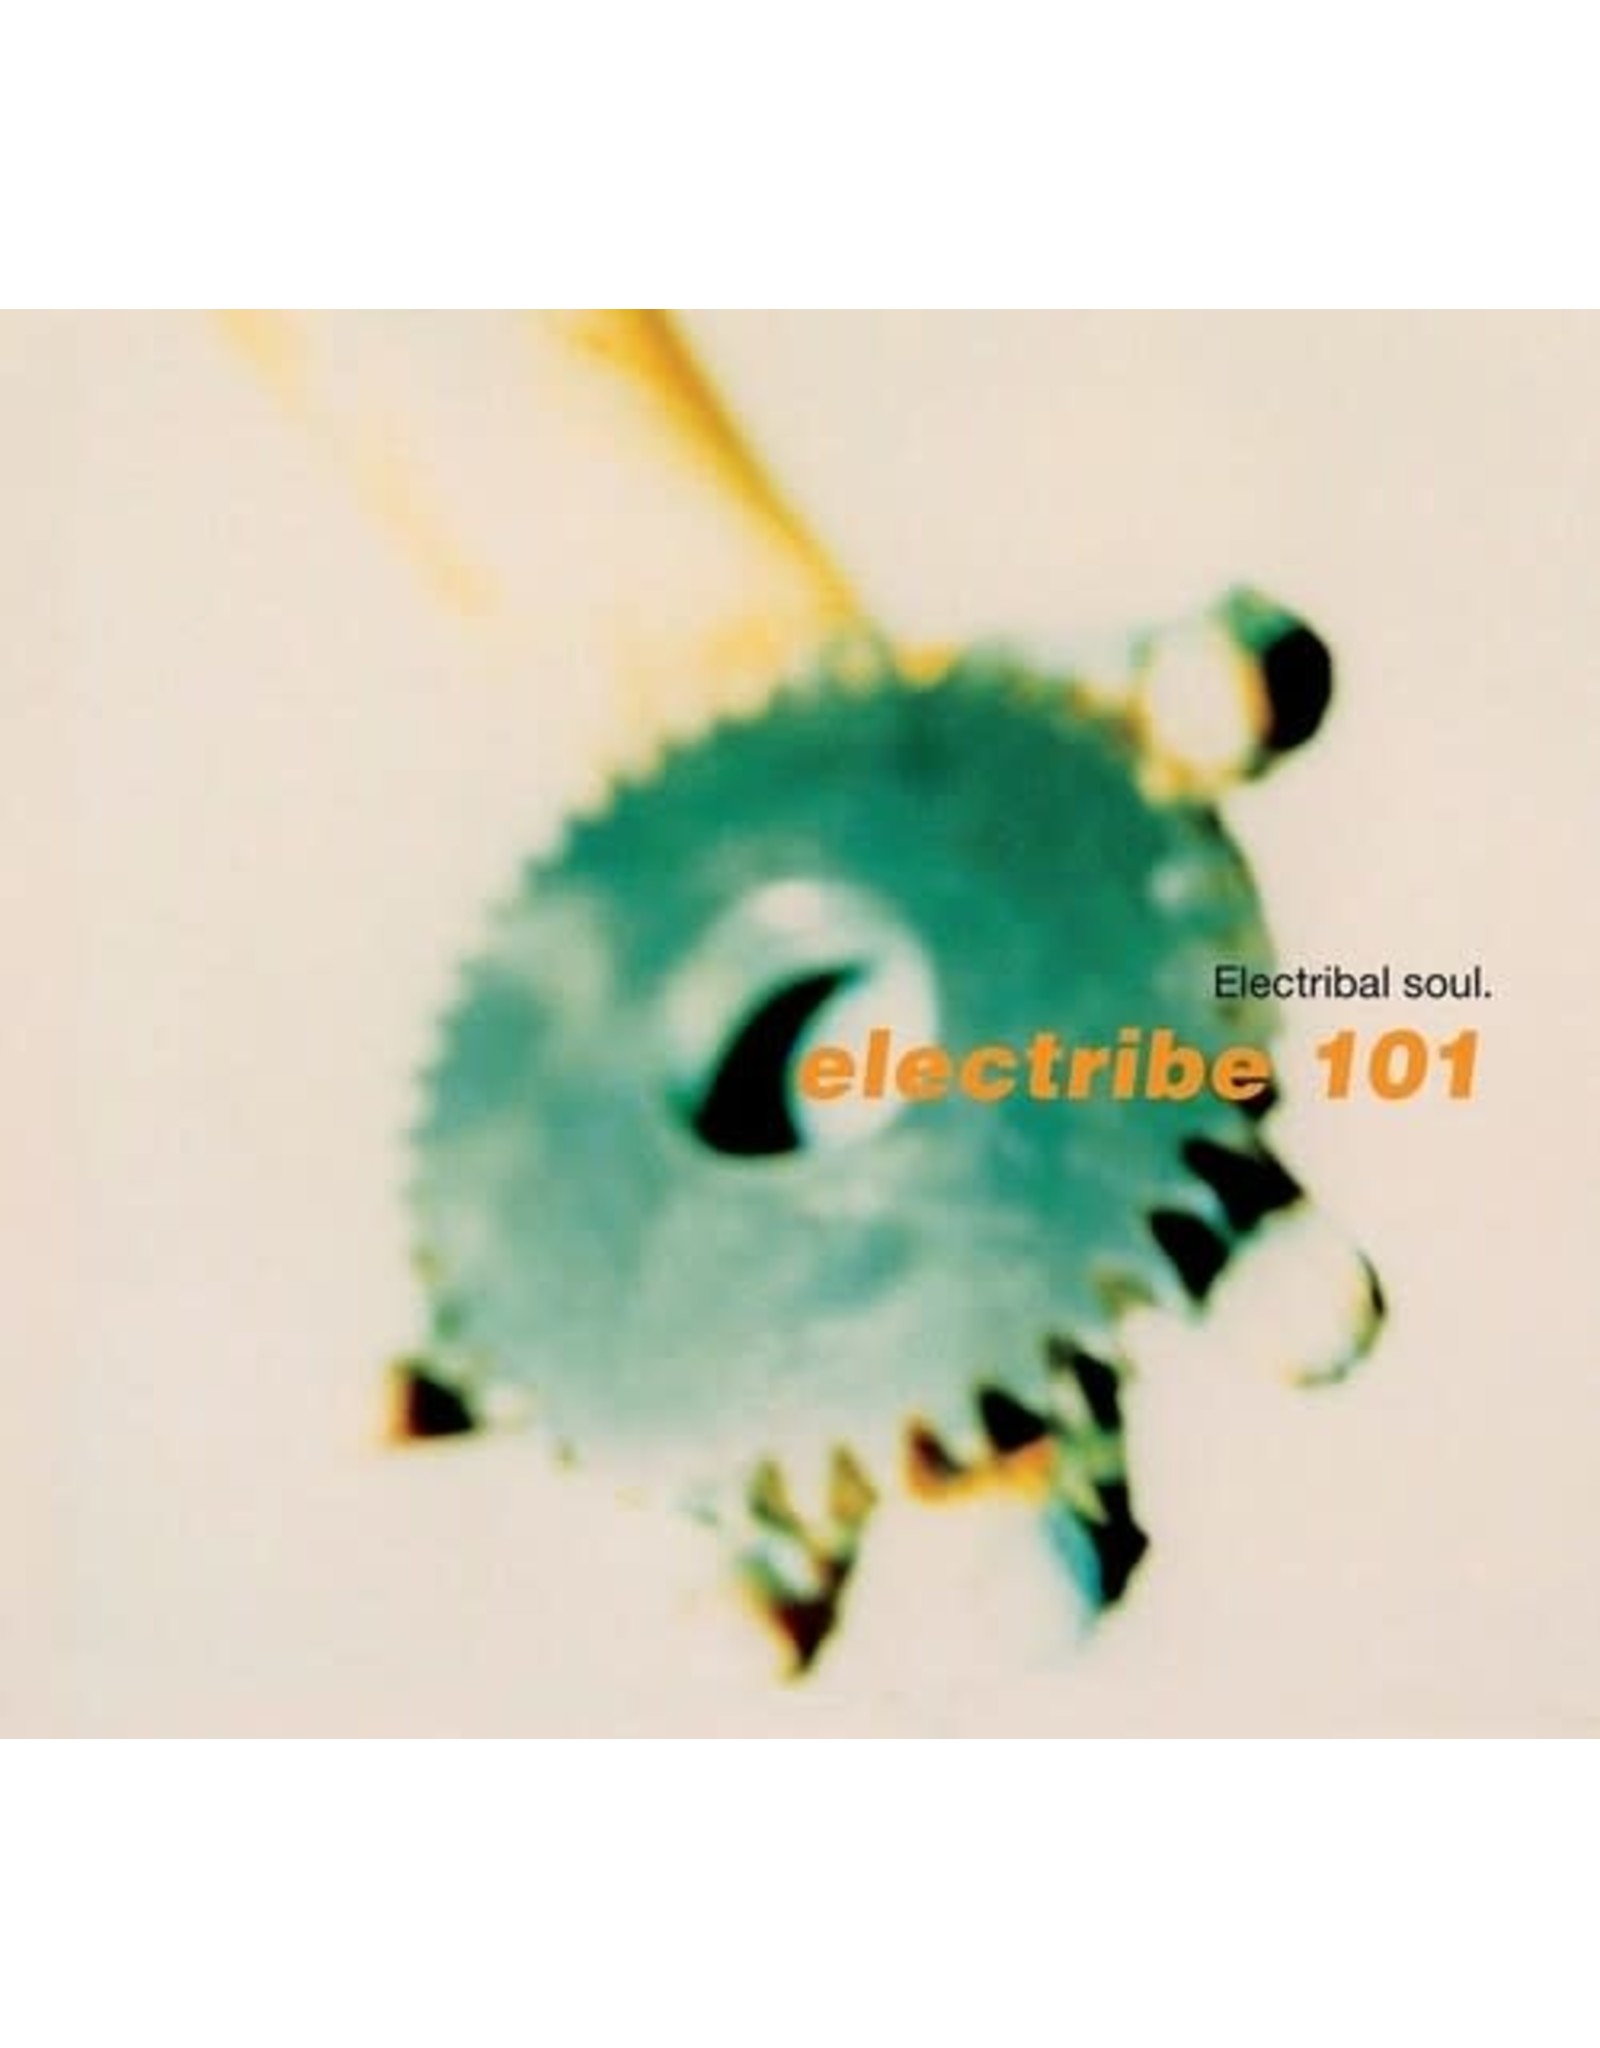 New Vinyl Electribe 101 - Electribal Soul LP